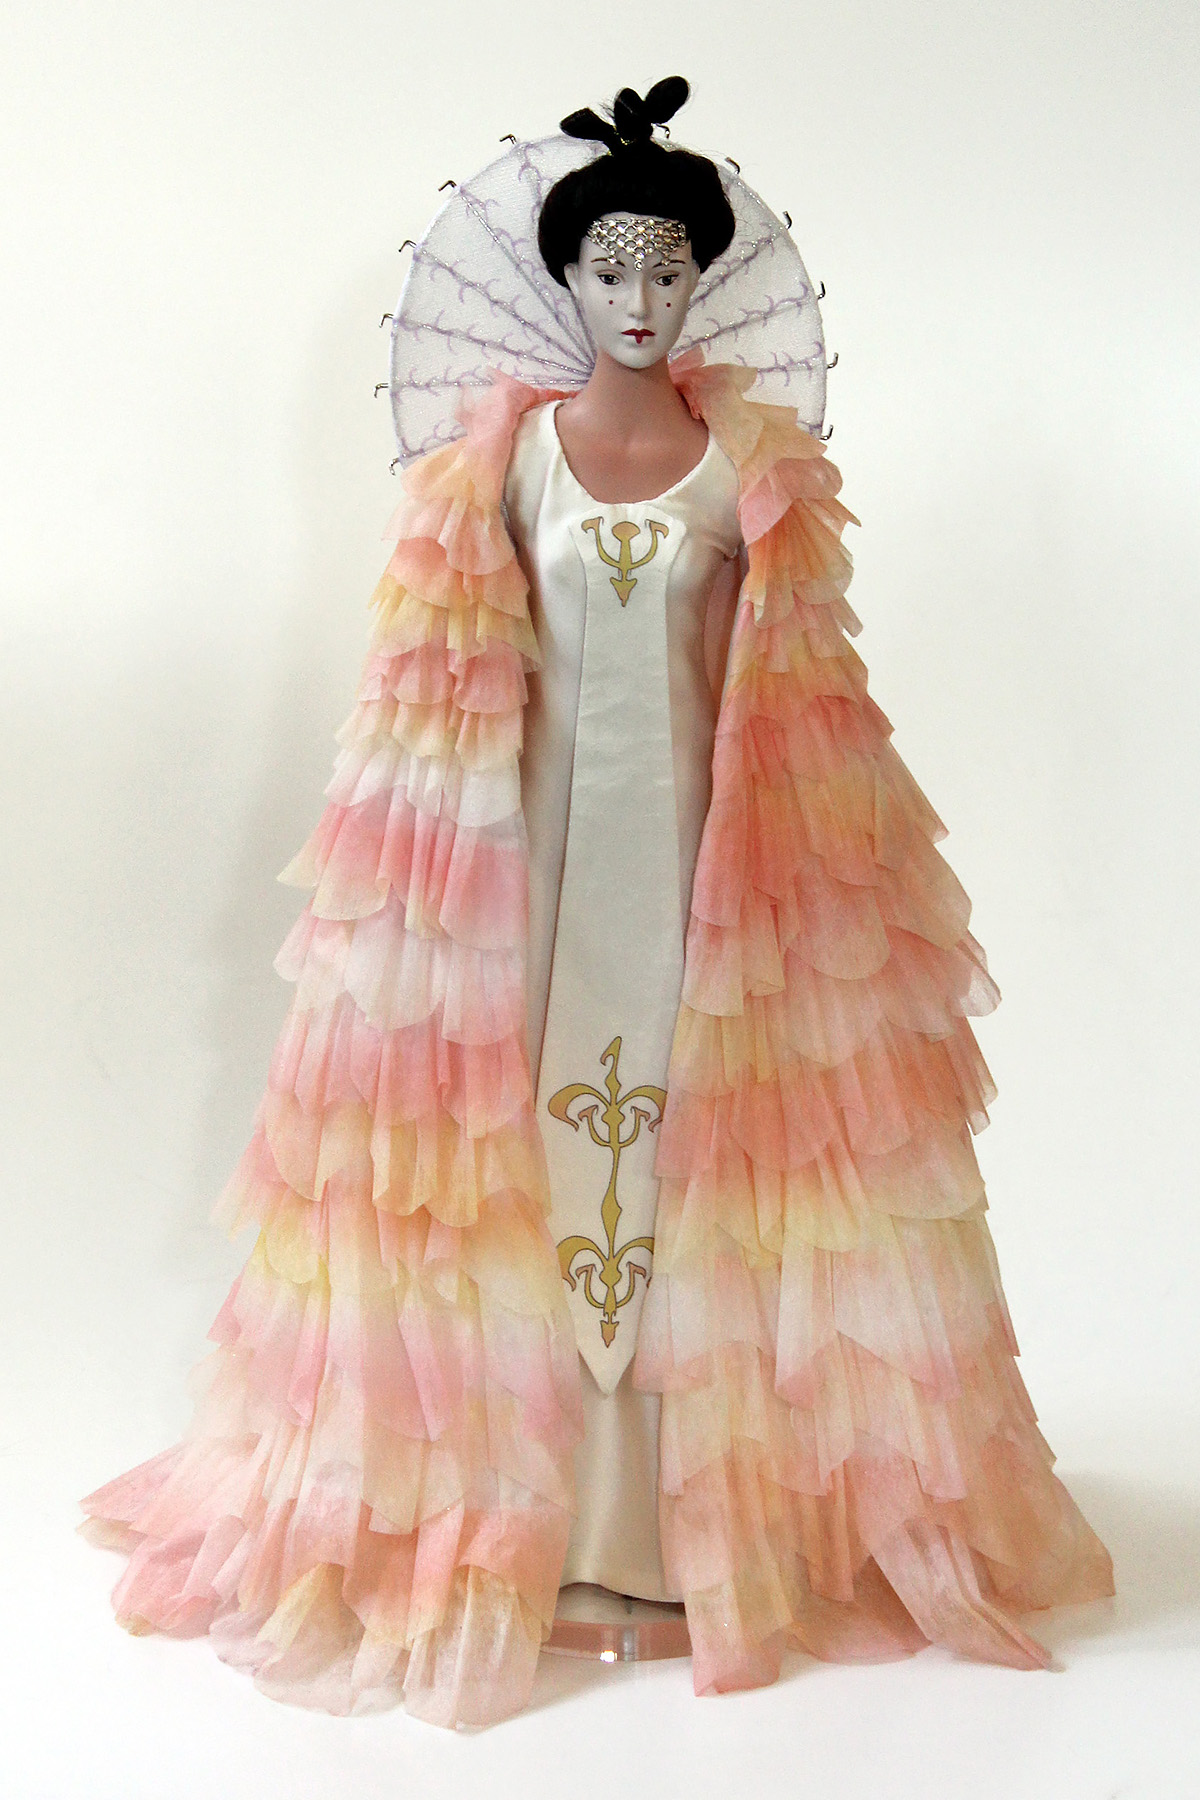 Tonner - Queen Amidala doll